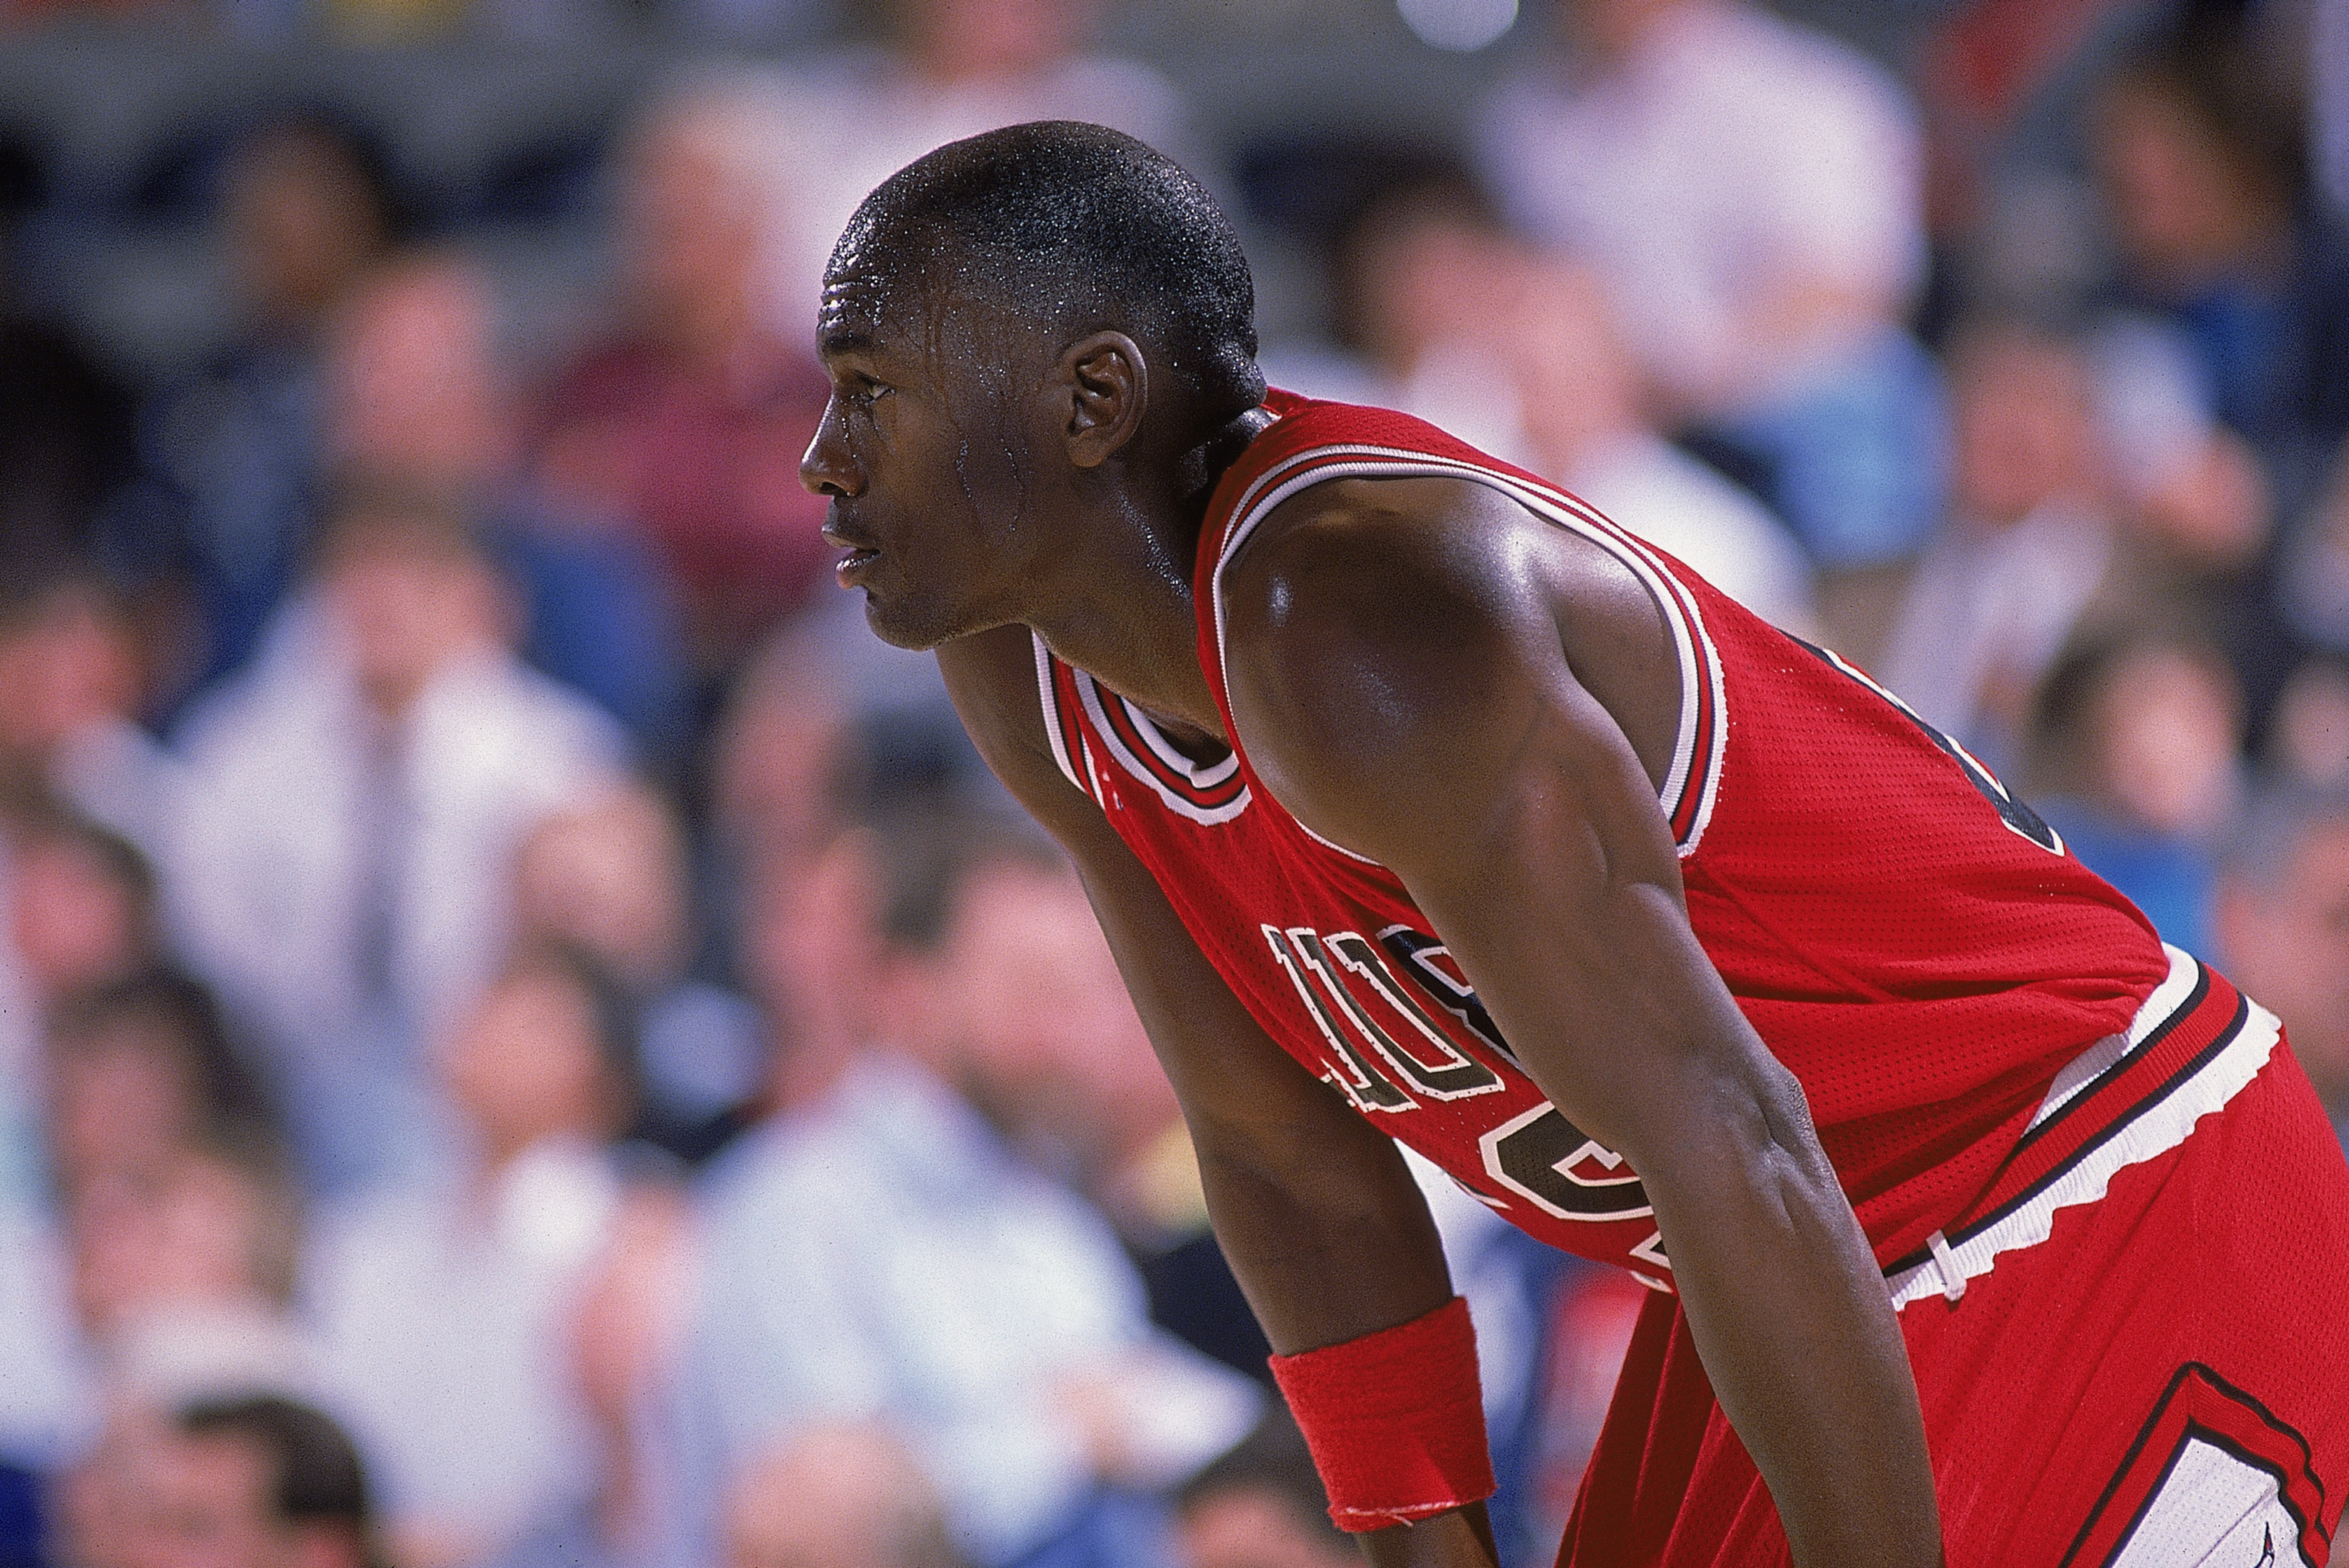 NBA Draft: Michael Jordan and the Best Player from Each Draft Class